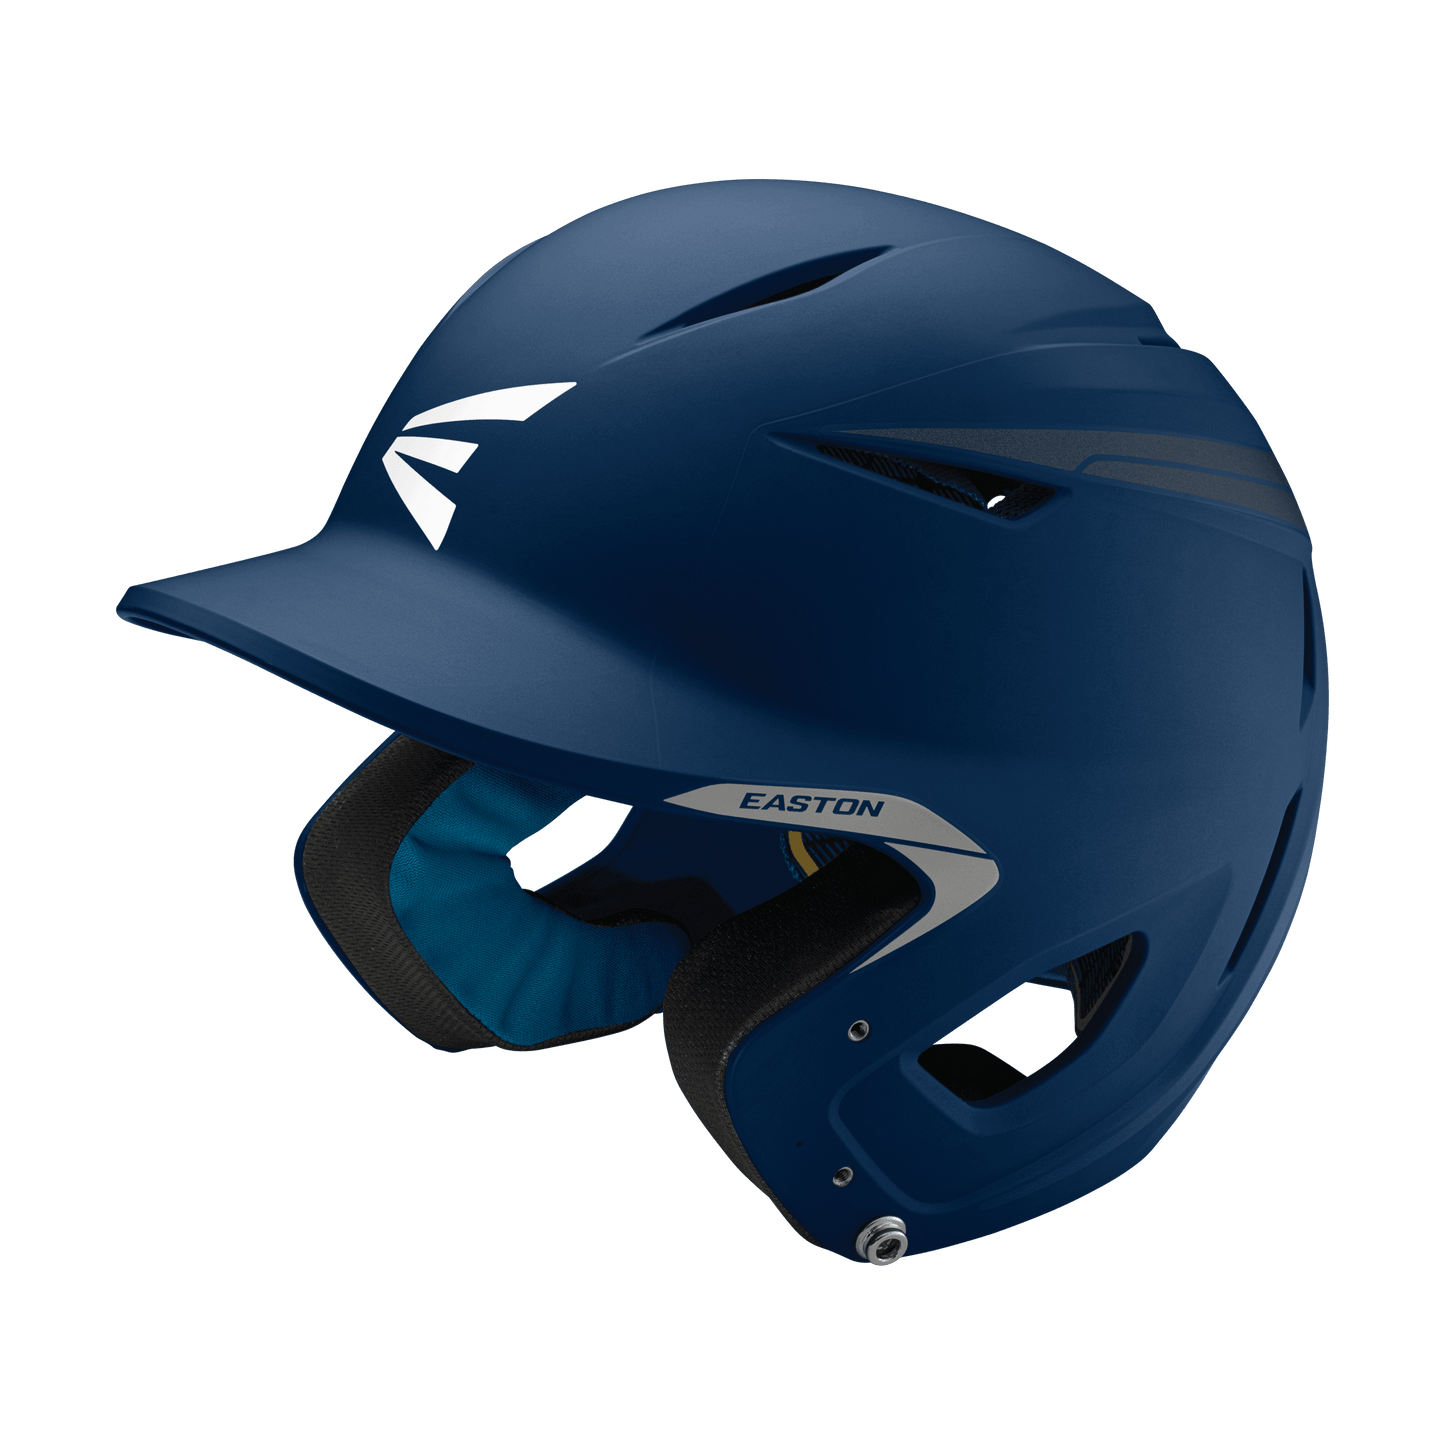 Easton Pro X Junior Batting Helmet - A168519